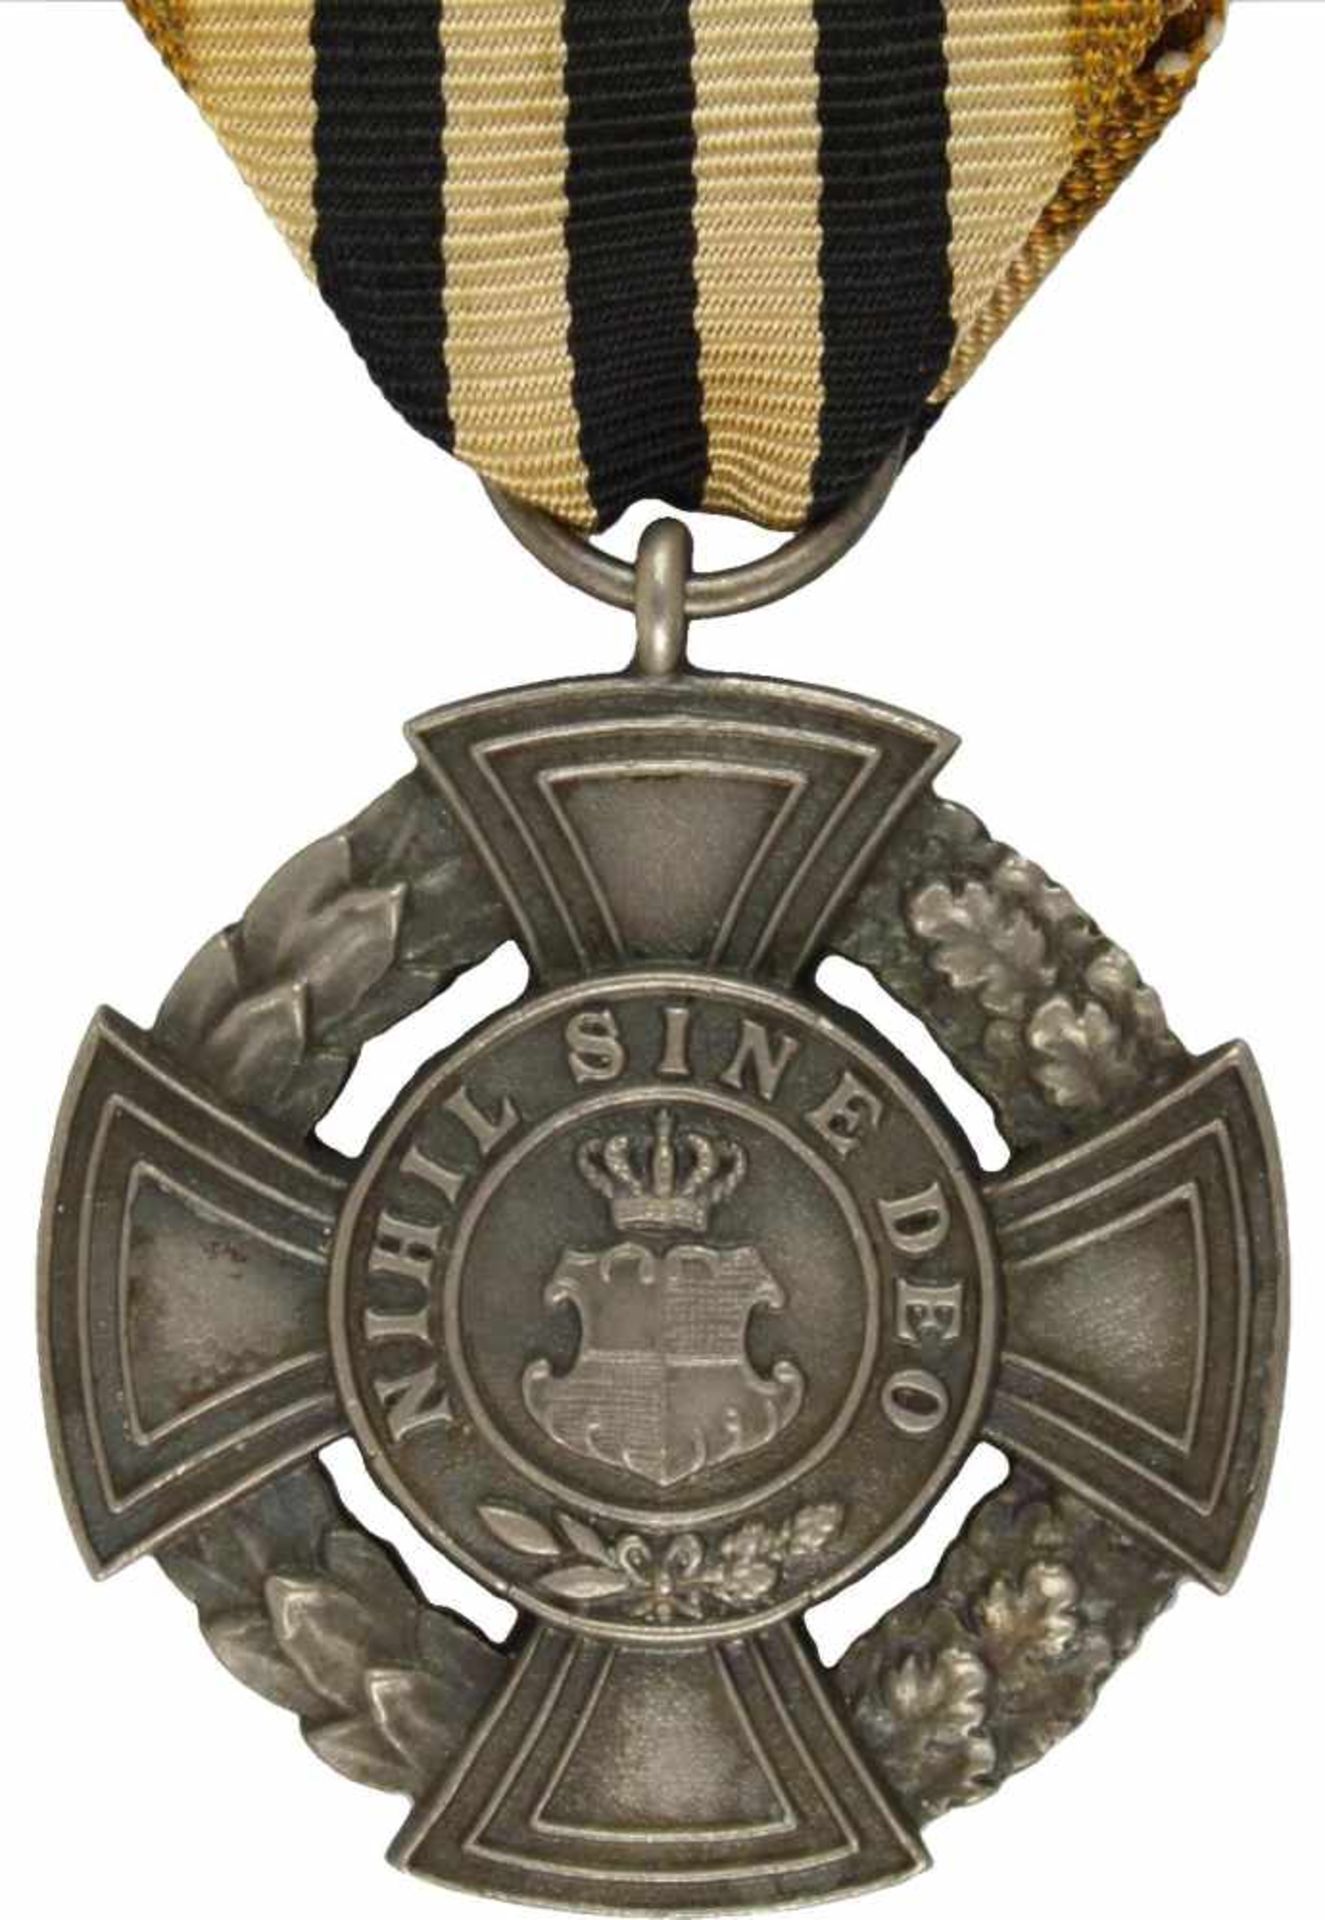 Königl. Rumänischer Ordendes Regierenden Hauses, Silbernes Verdienstkreuz. Kreuz Bronze - Bild 2 aus 2